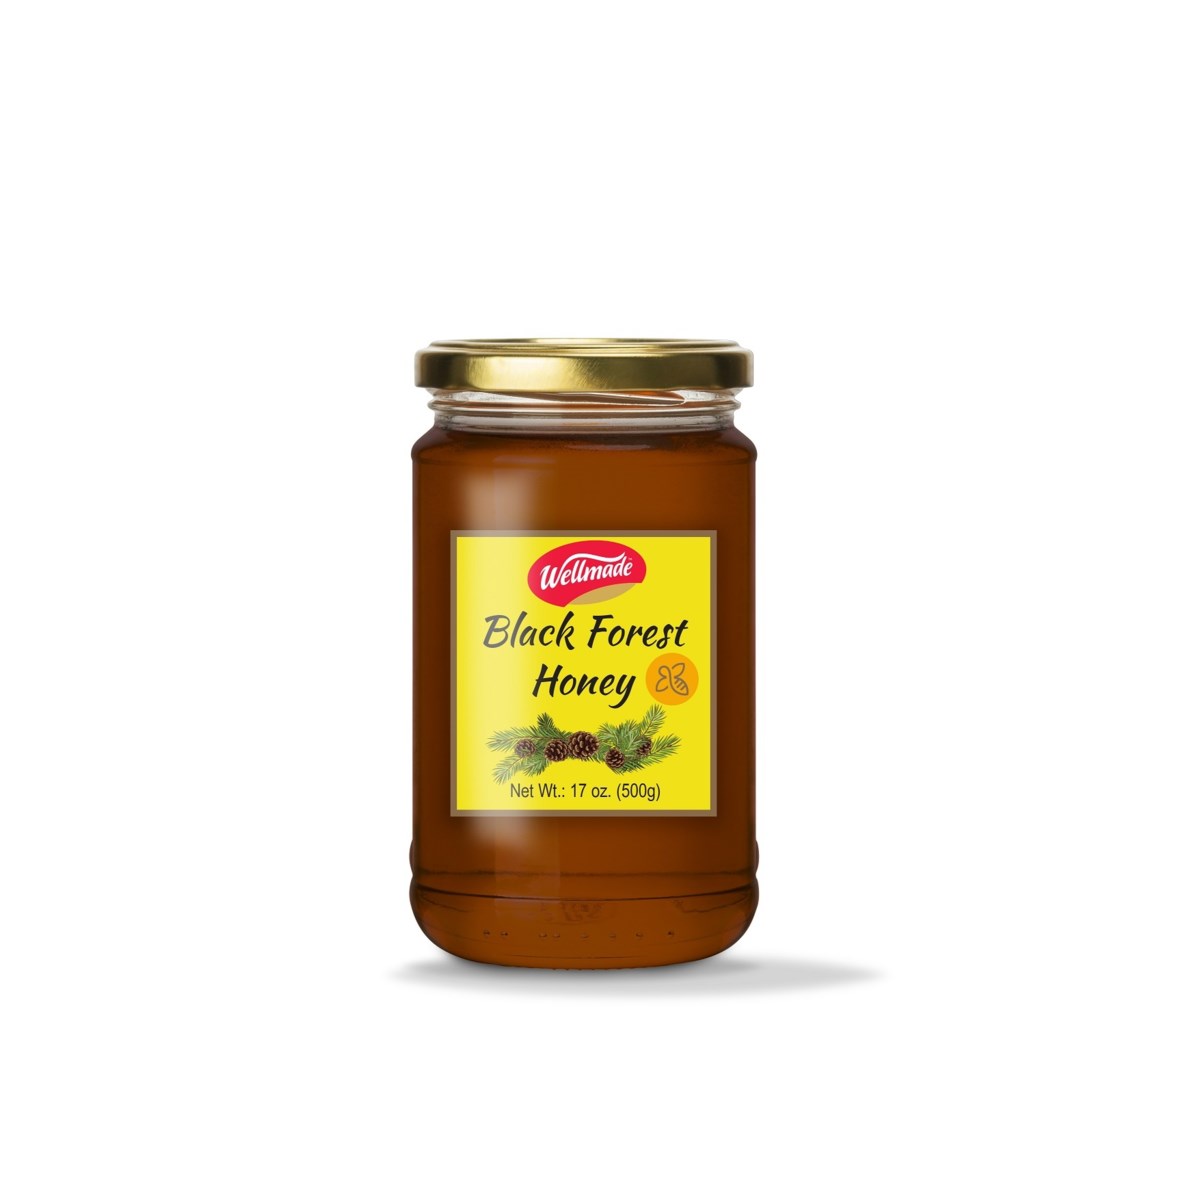 Black Forest Honey in glass jar "Wellmade" 500g *